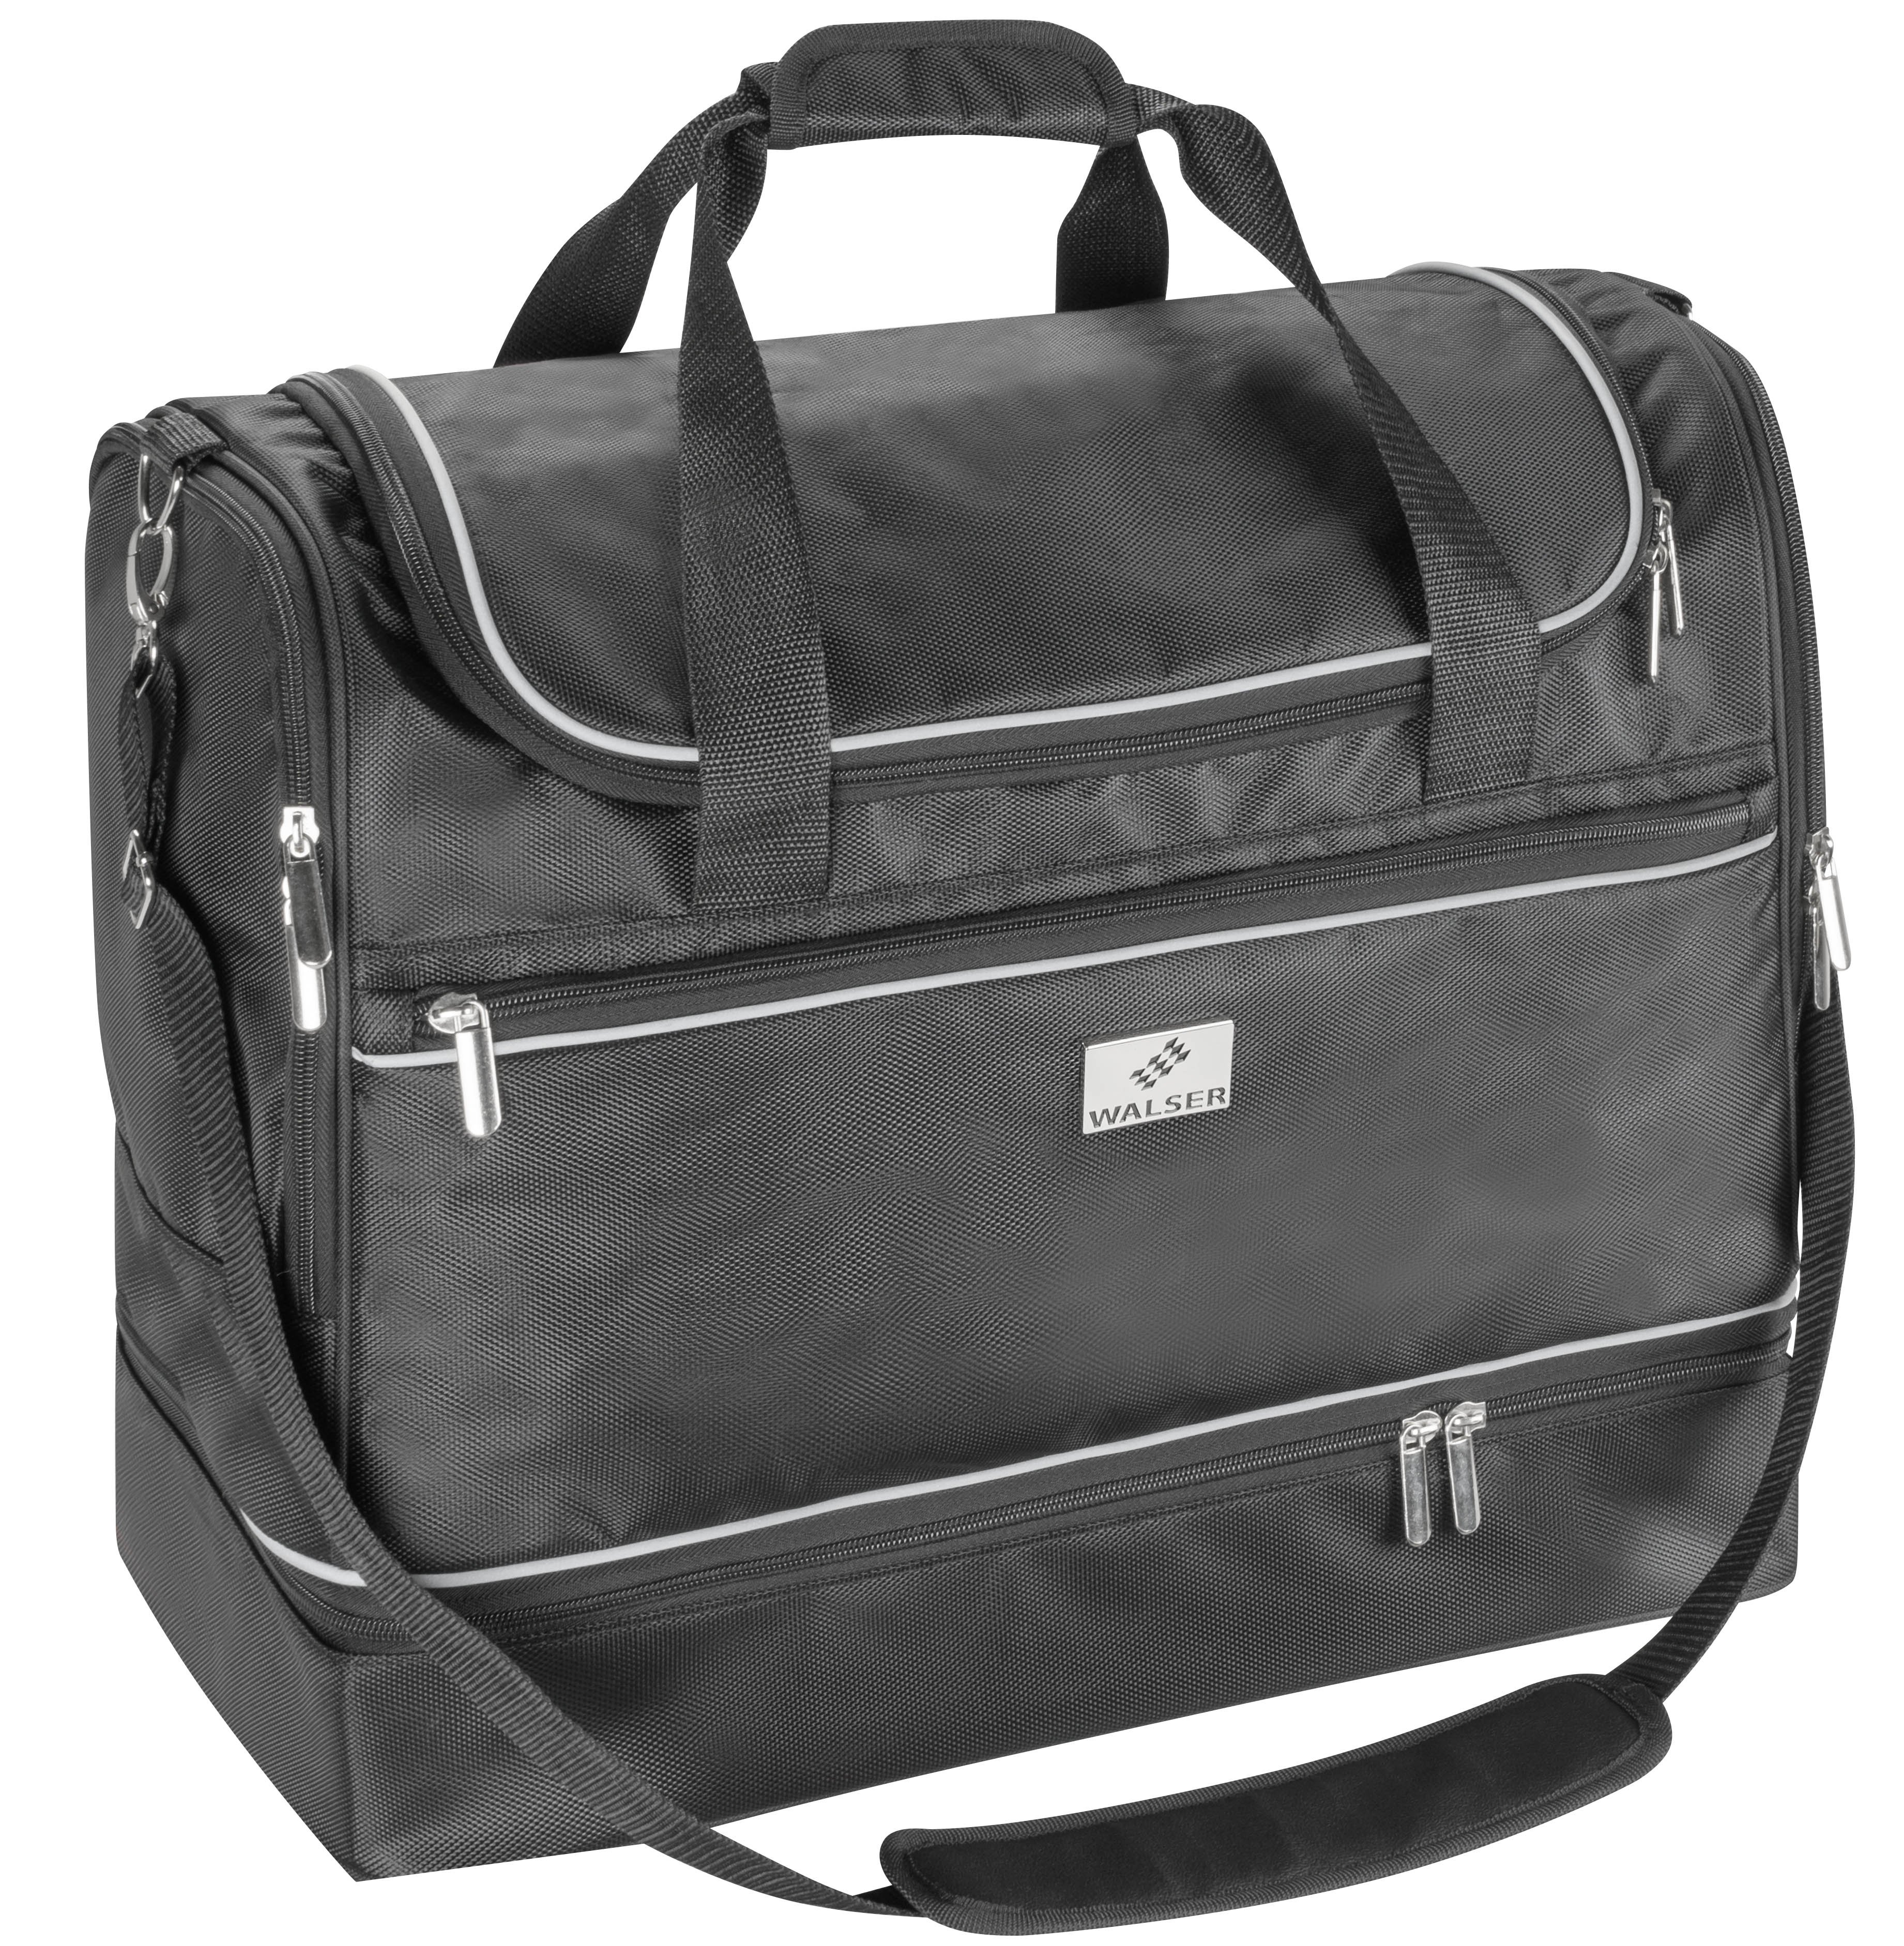 Carbags sports bag 80L - 55x30x45cm